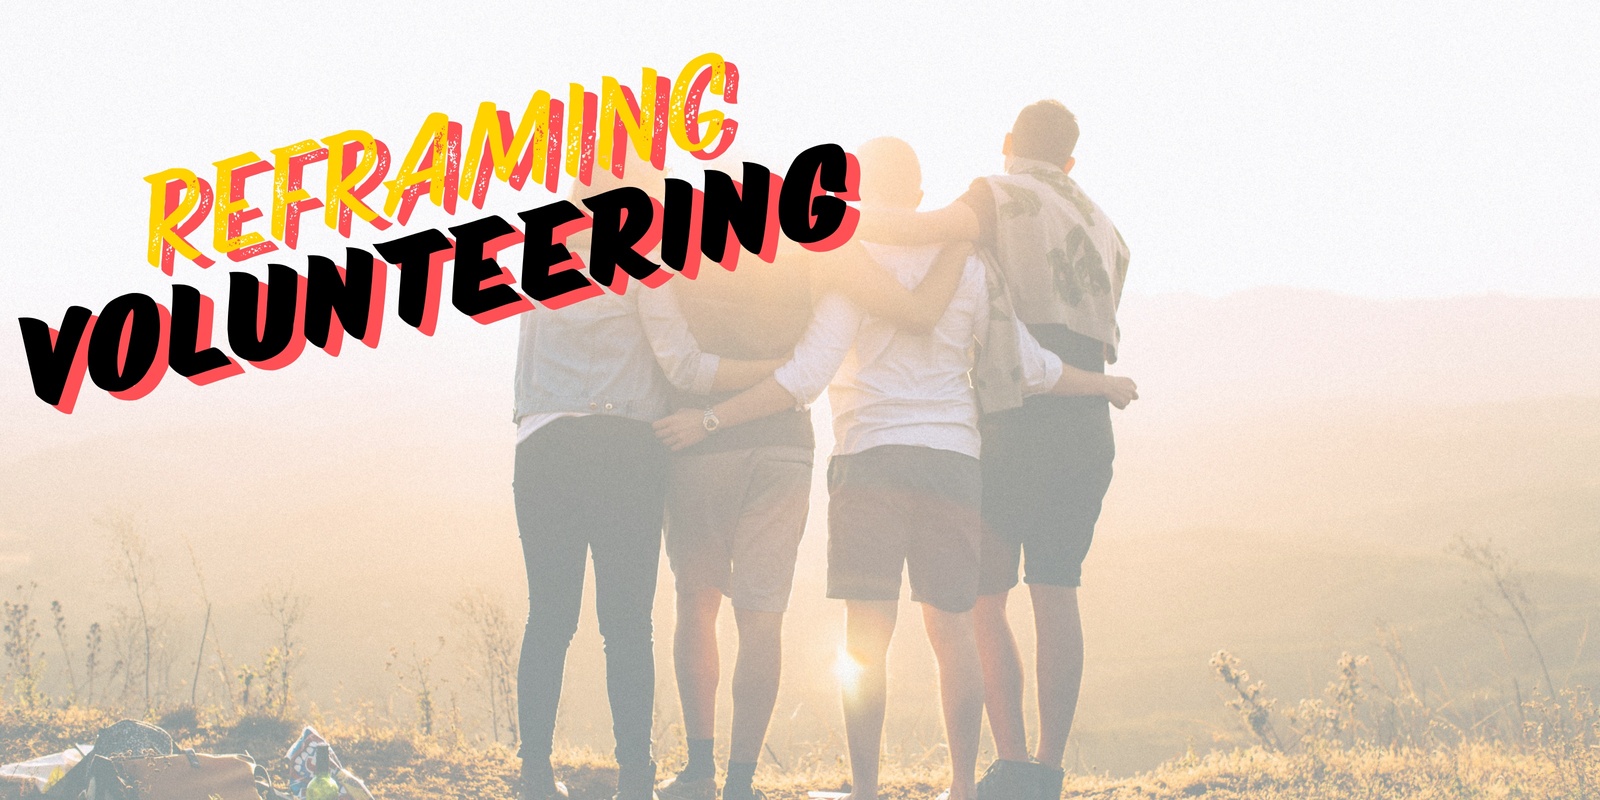 Banner image for Reframing Volunteering : Marketing Volunteering for Younger Generations